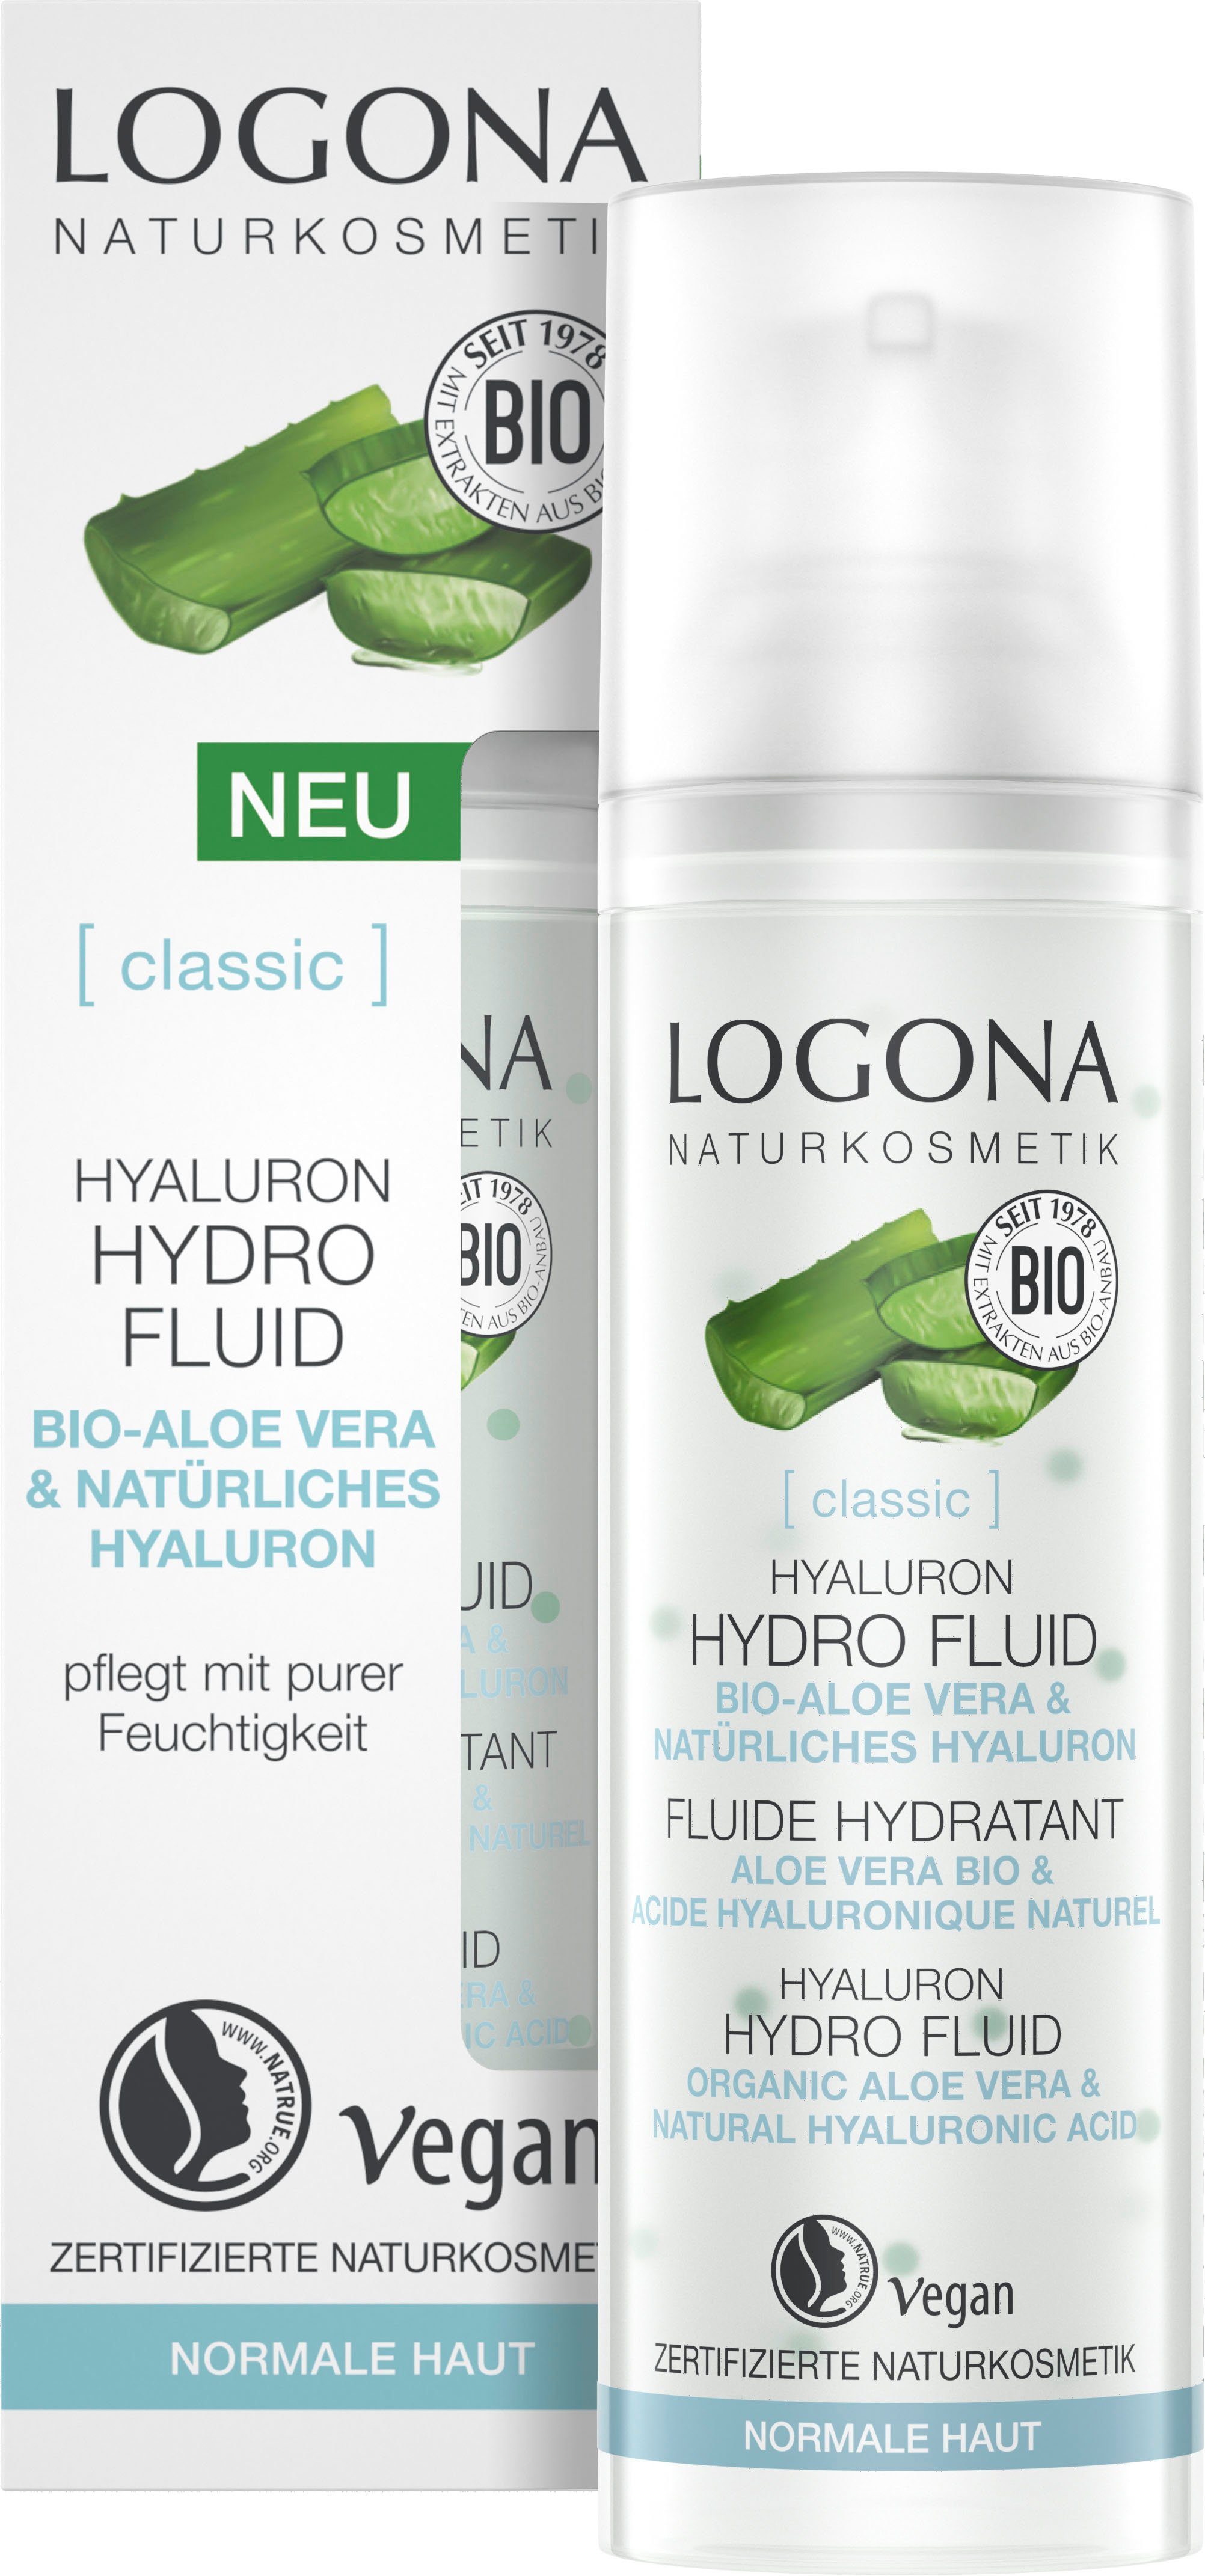 LOGONA Gesichtsfluid Logona Hyaluron Hydro Fluid [classic